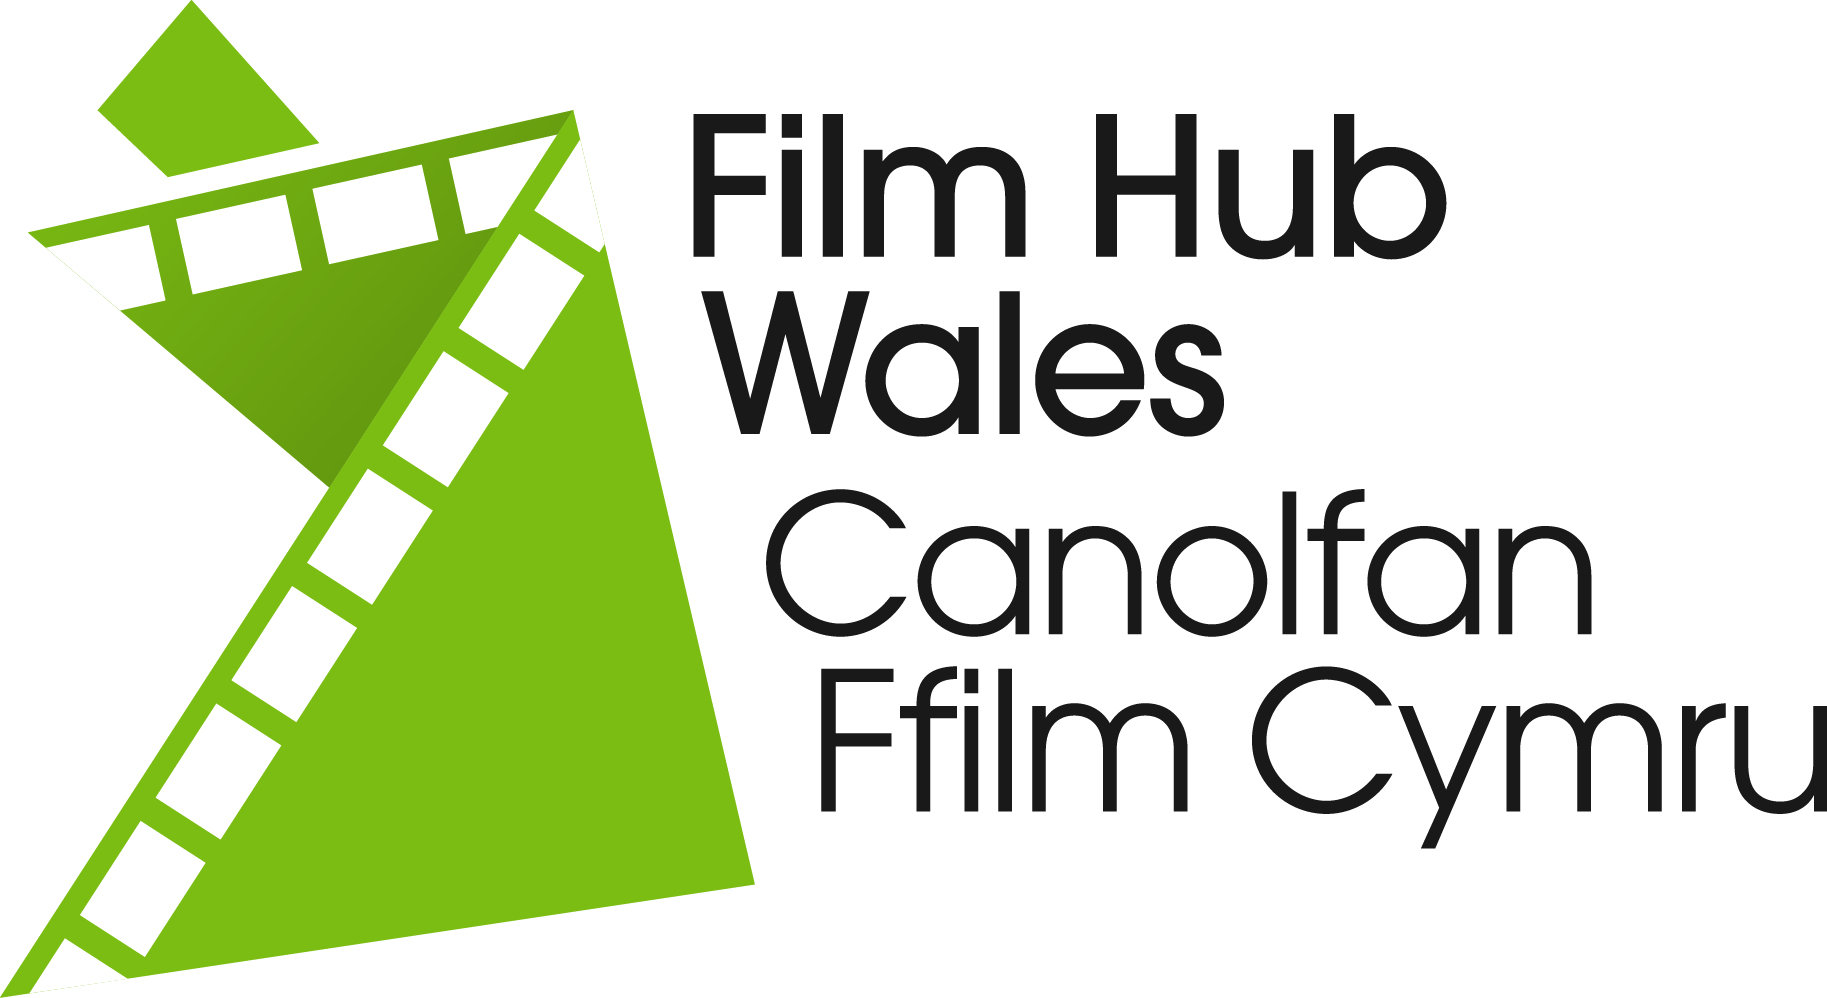 film hub wales logo - Copy.jpg